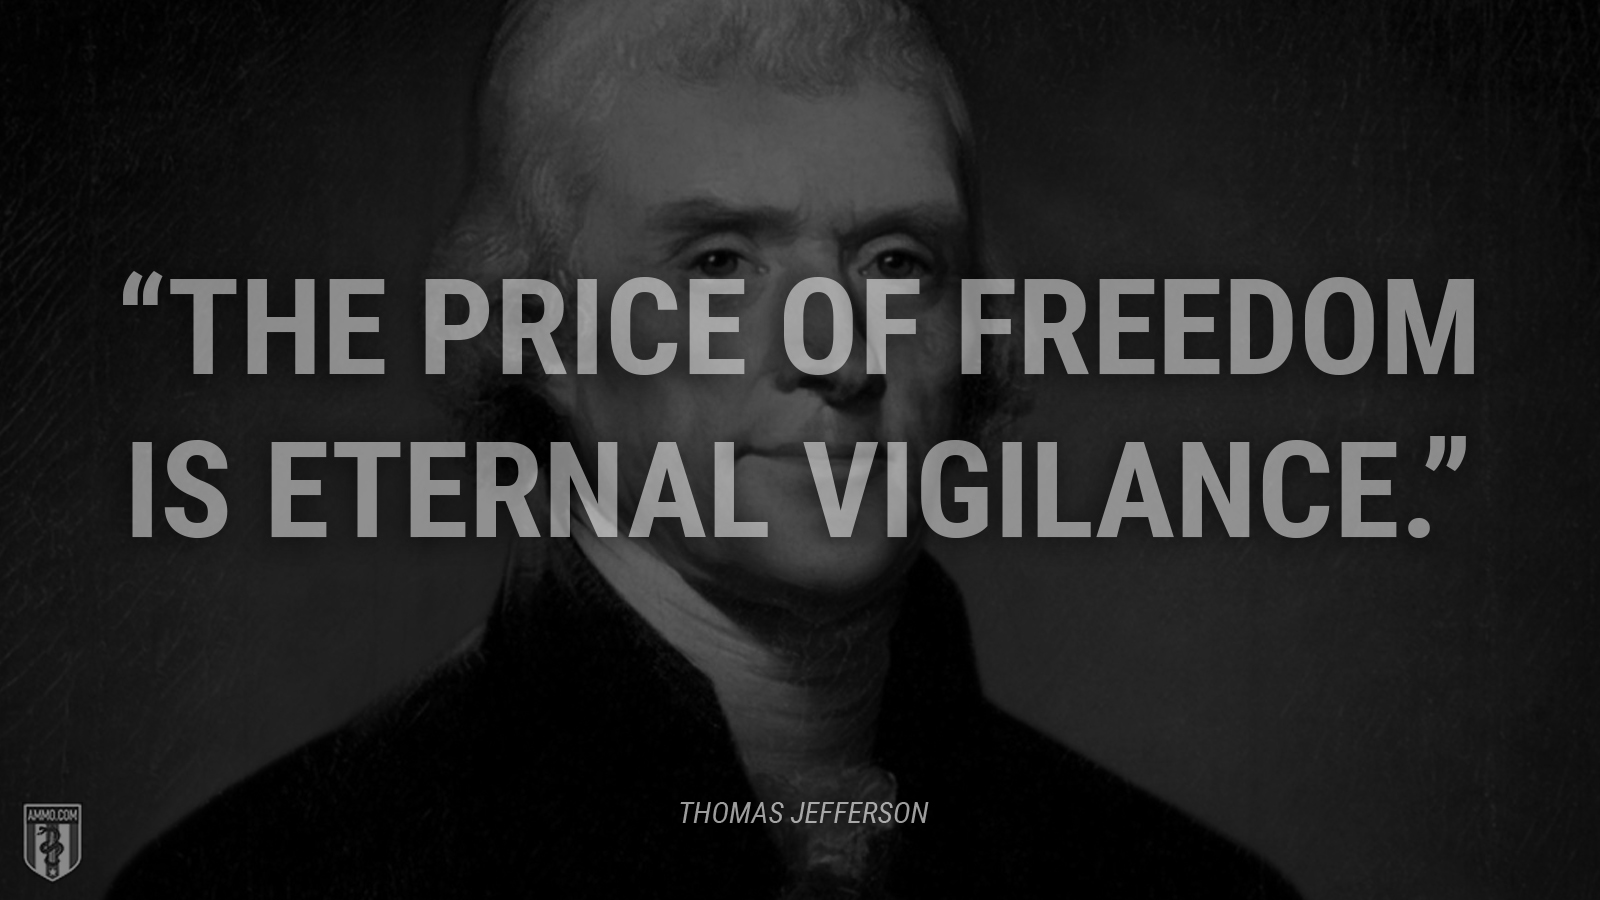 “The price of freedom is eternal vigilance.” - Thomas Jefferson